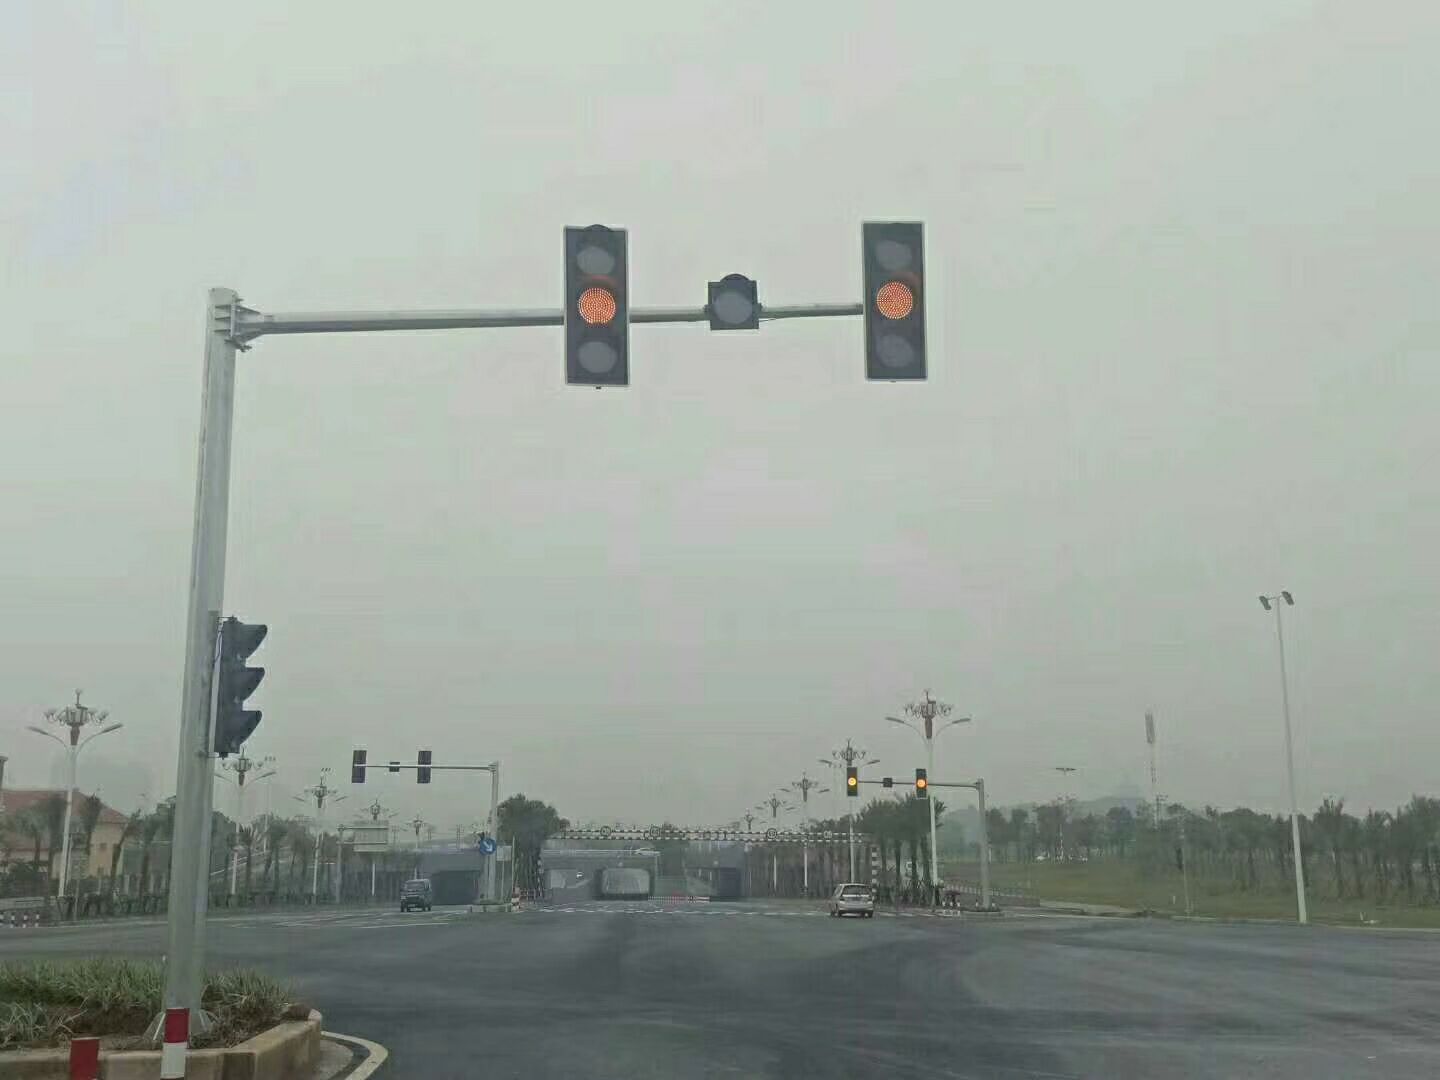 Installation the traffic lights on foggy days